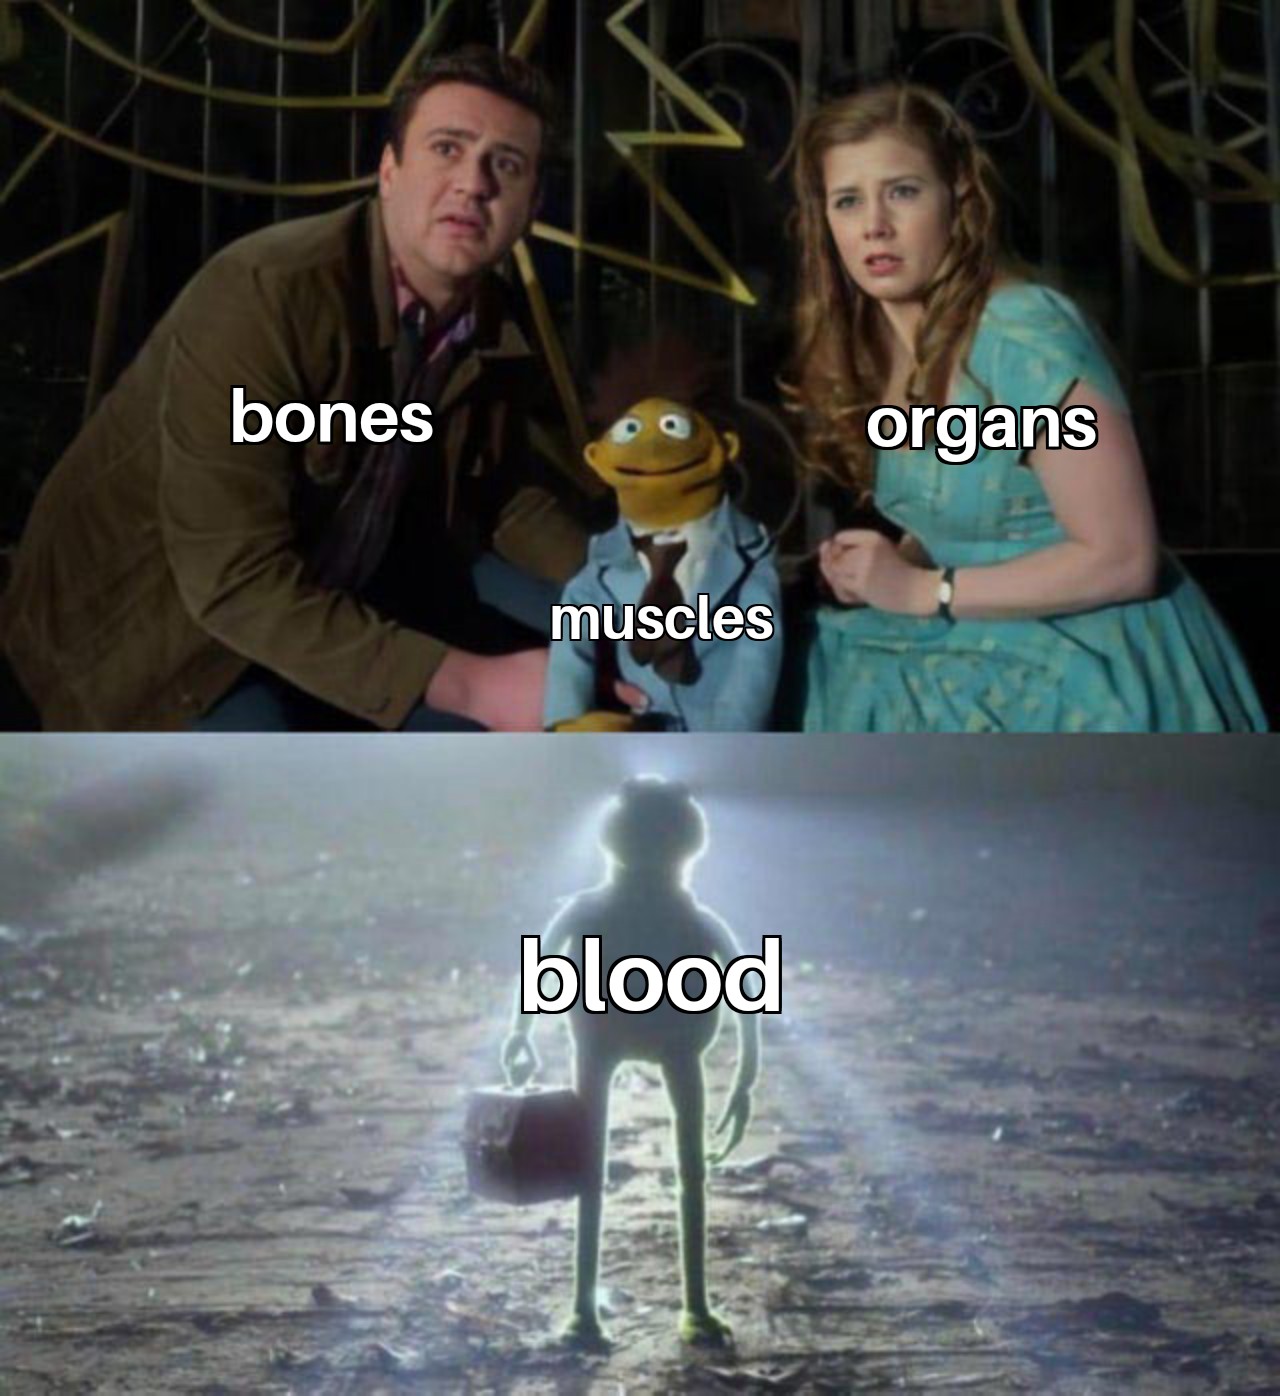 dank memes - kermit arrival meme - A bones organs muscles blood